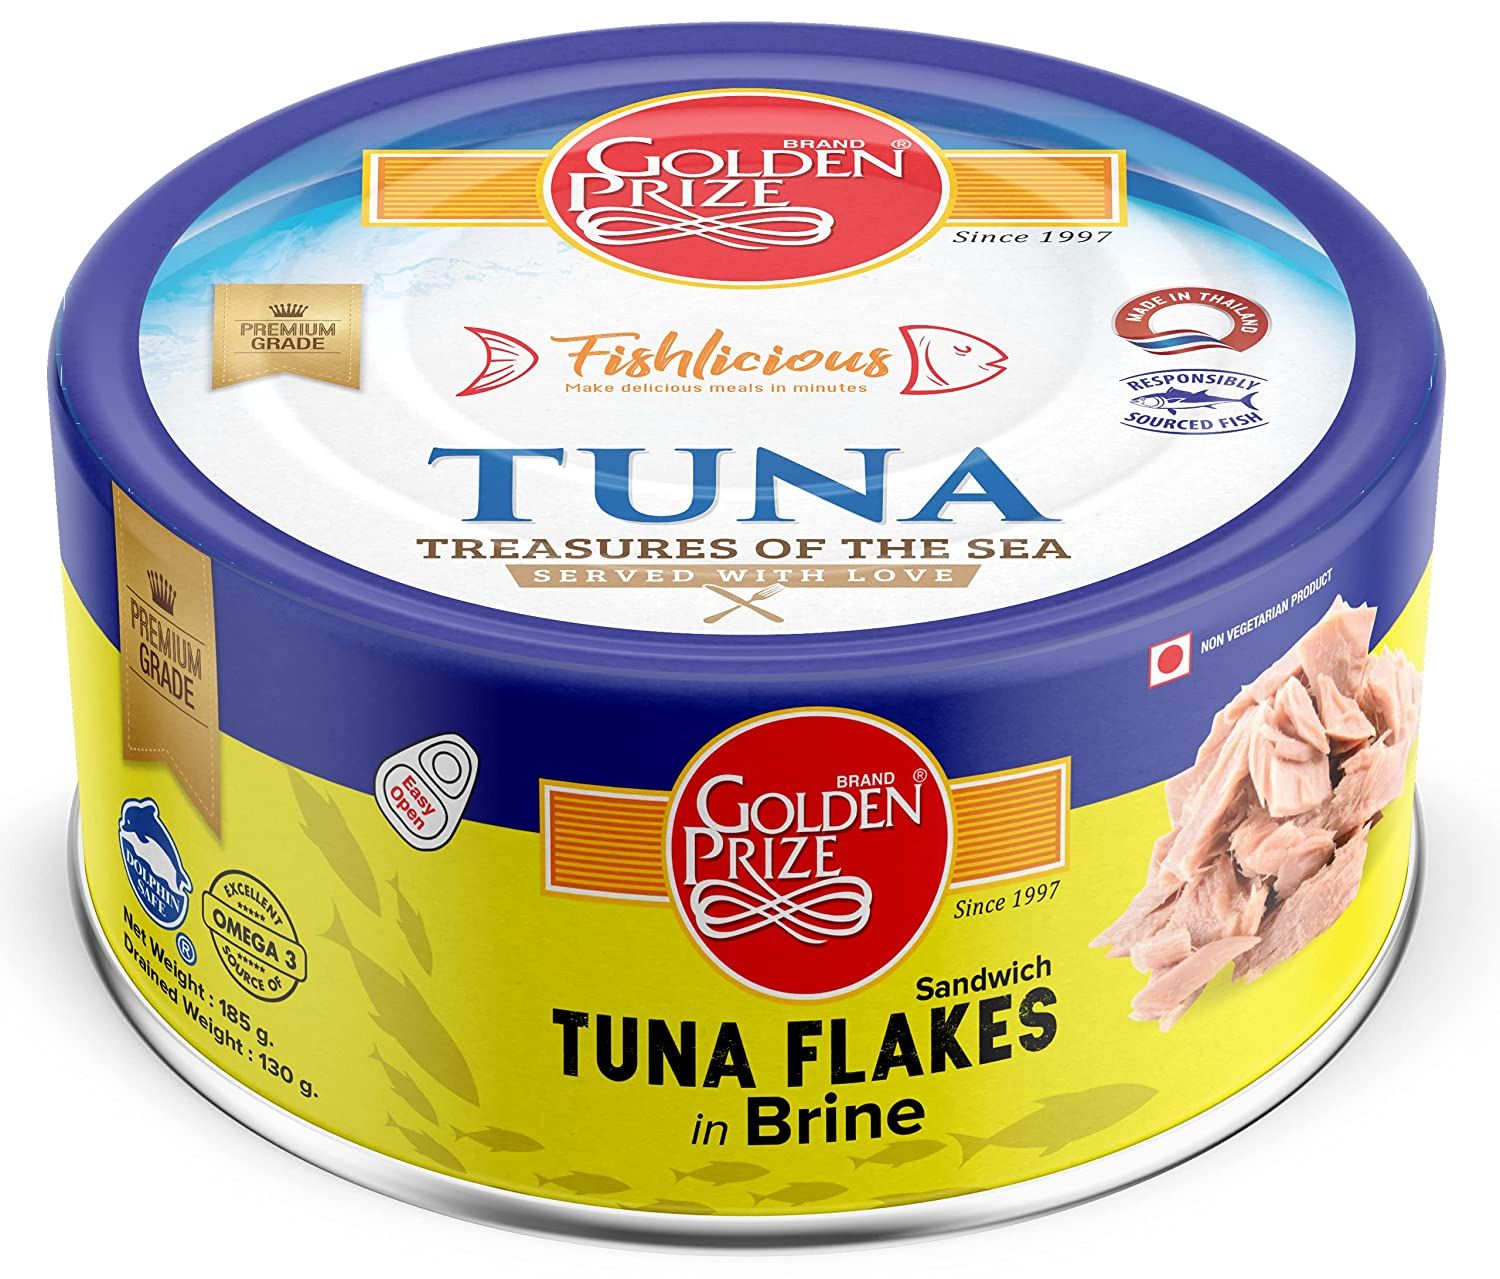 Golden Prize Tuna Flakes in Brine Image